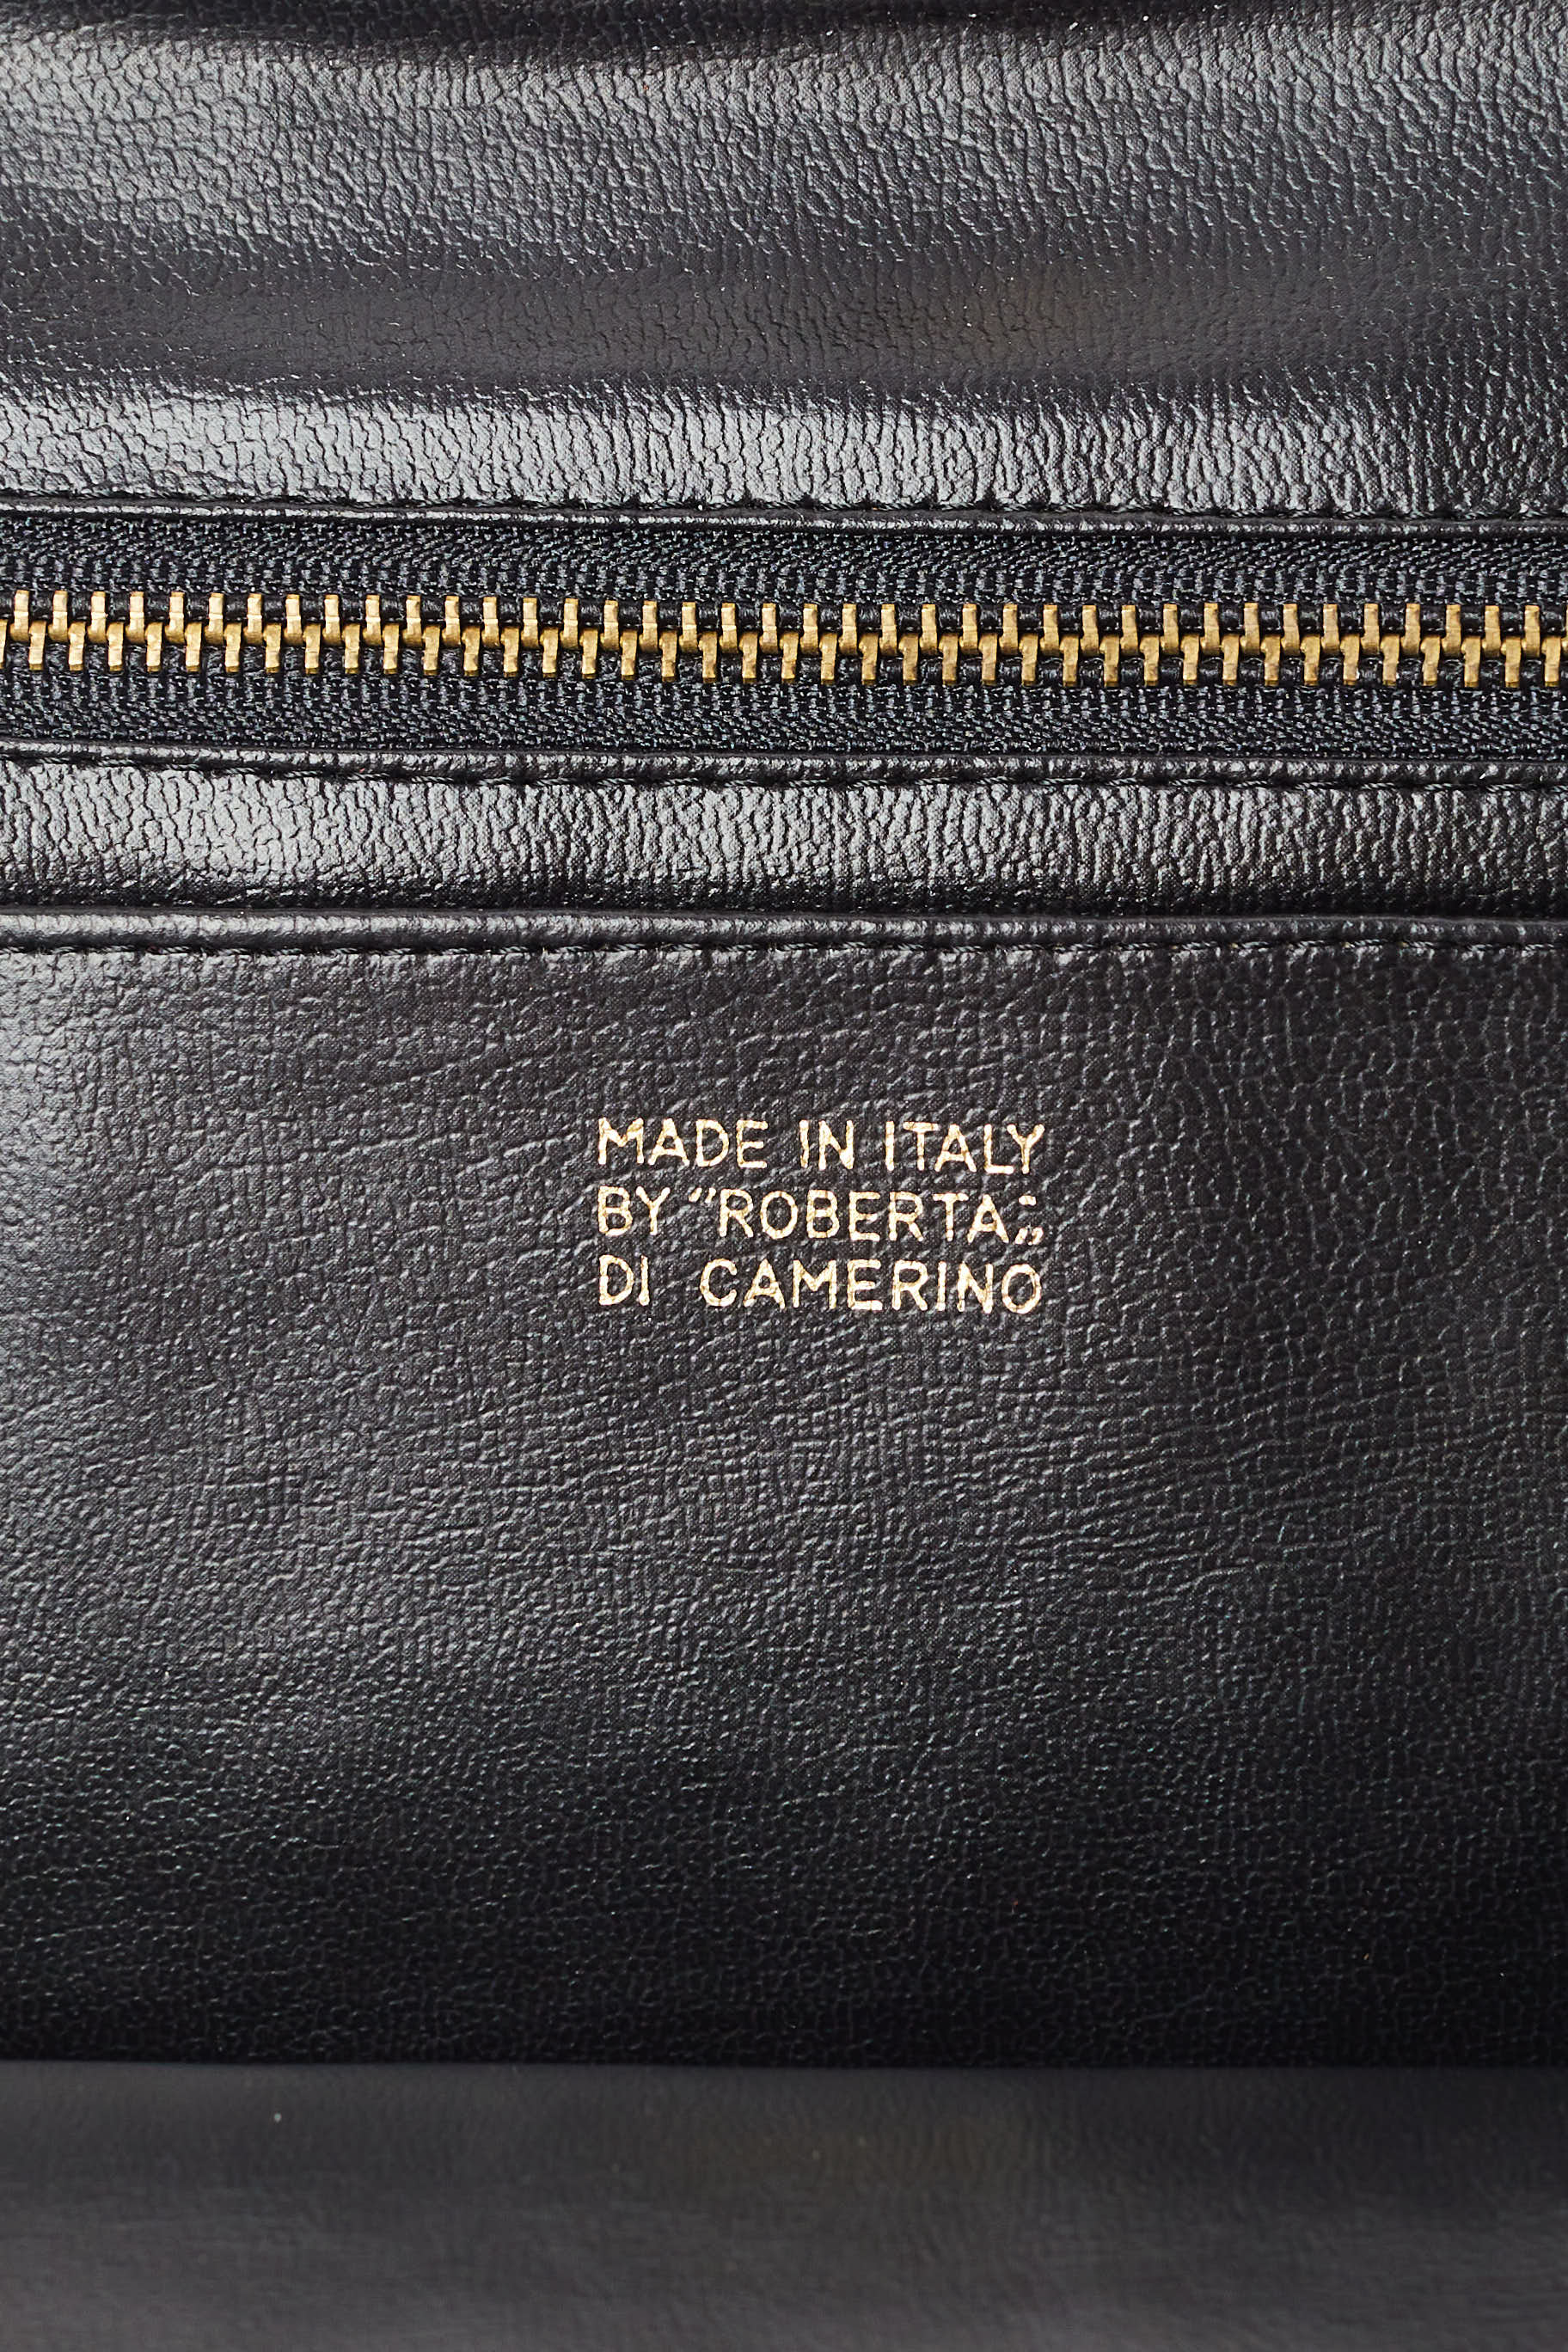 Roberta Di Camerino <br> 60's velvet trompe l'oeil belt print bag